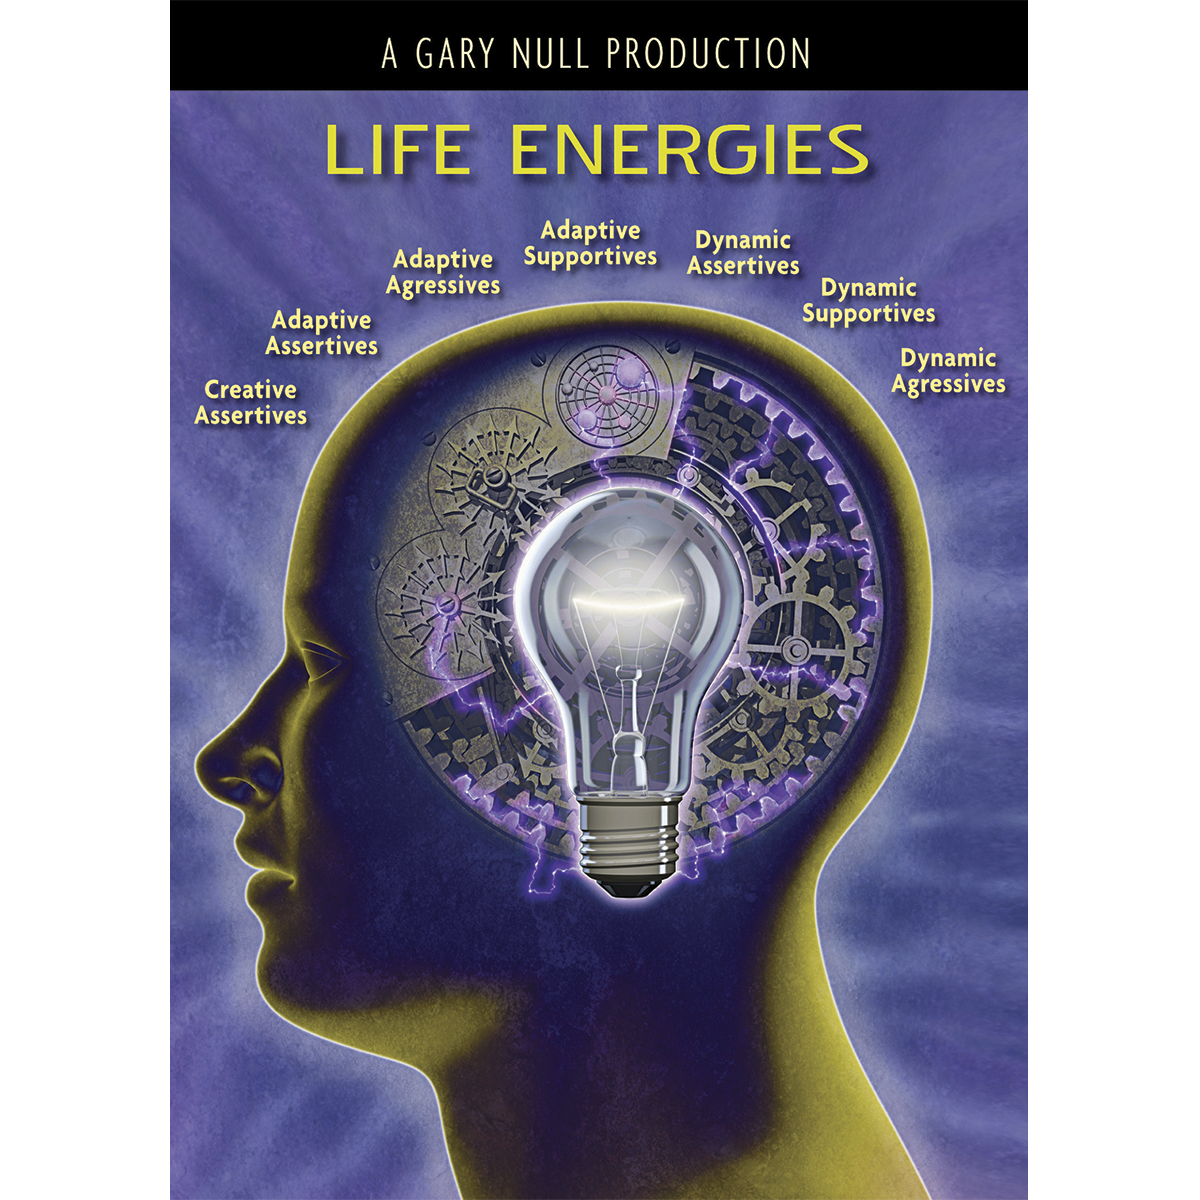 Life-Energies-DVD_4e993395-e612-49b1-96c6-0eefd737e3a1.png